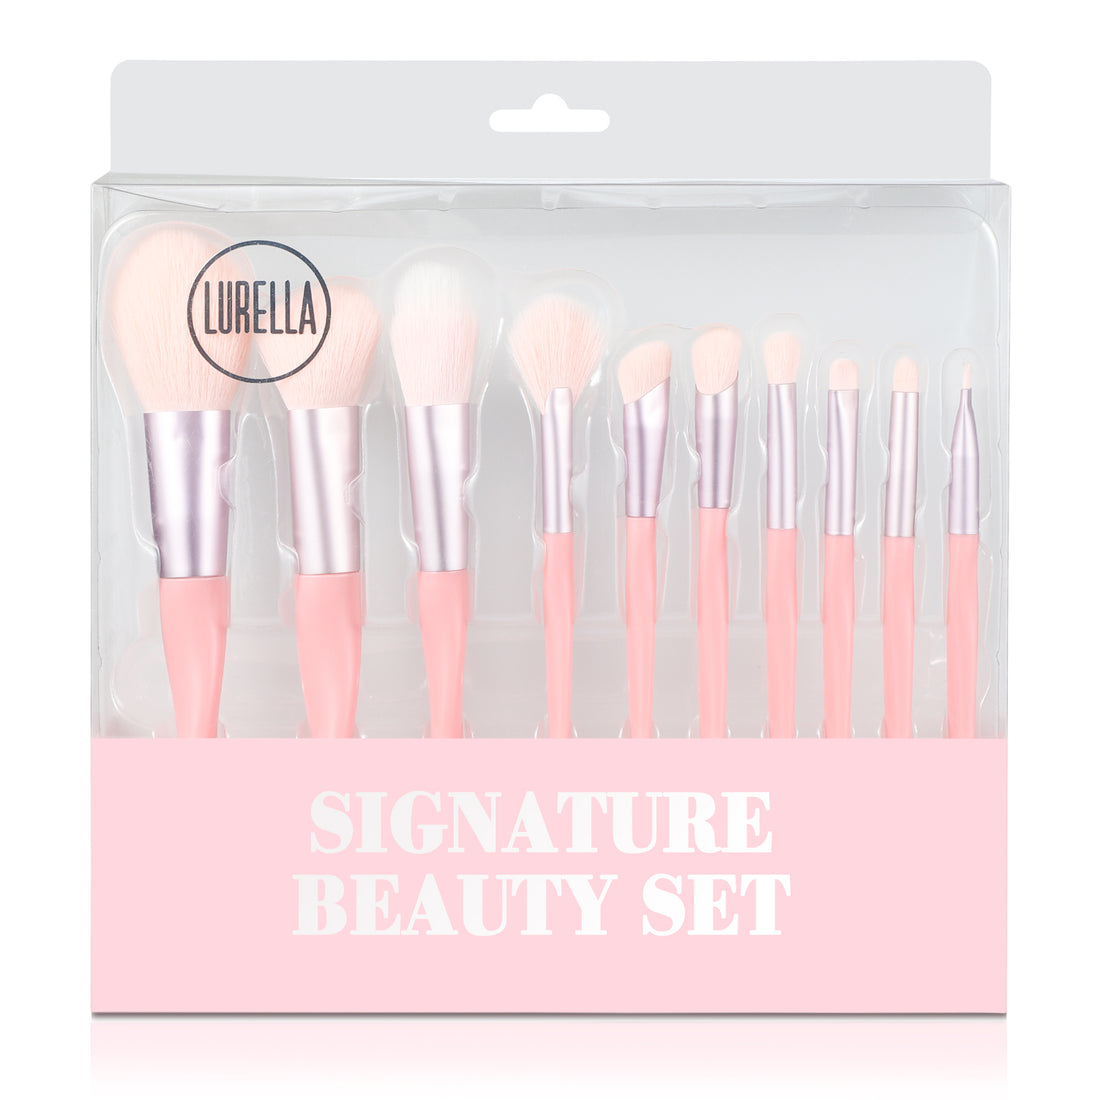 Signature Beauty Brush Set